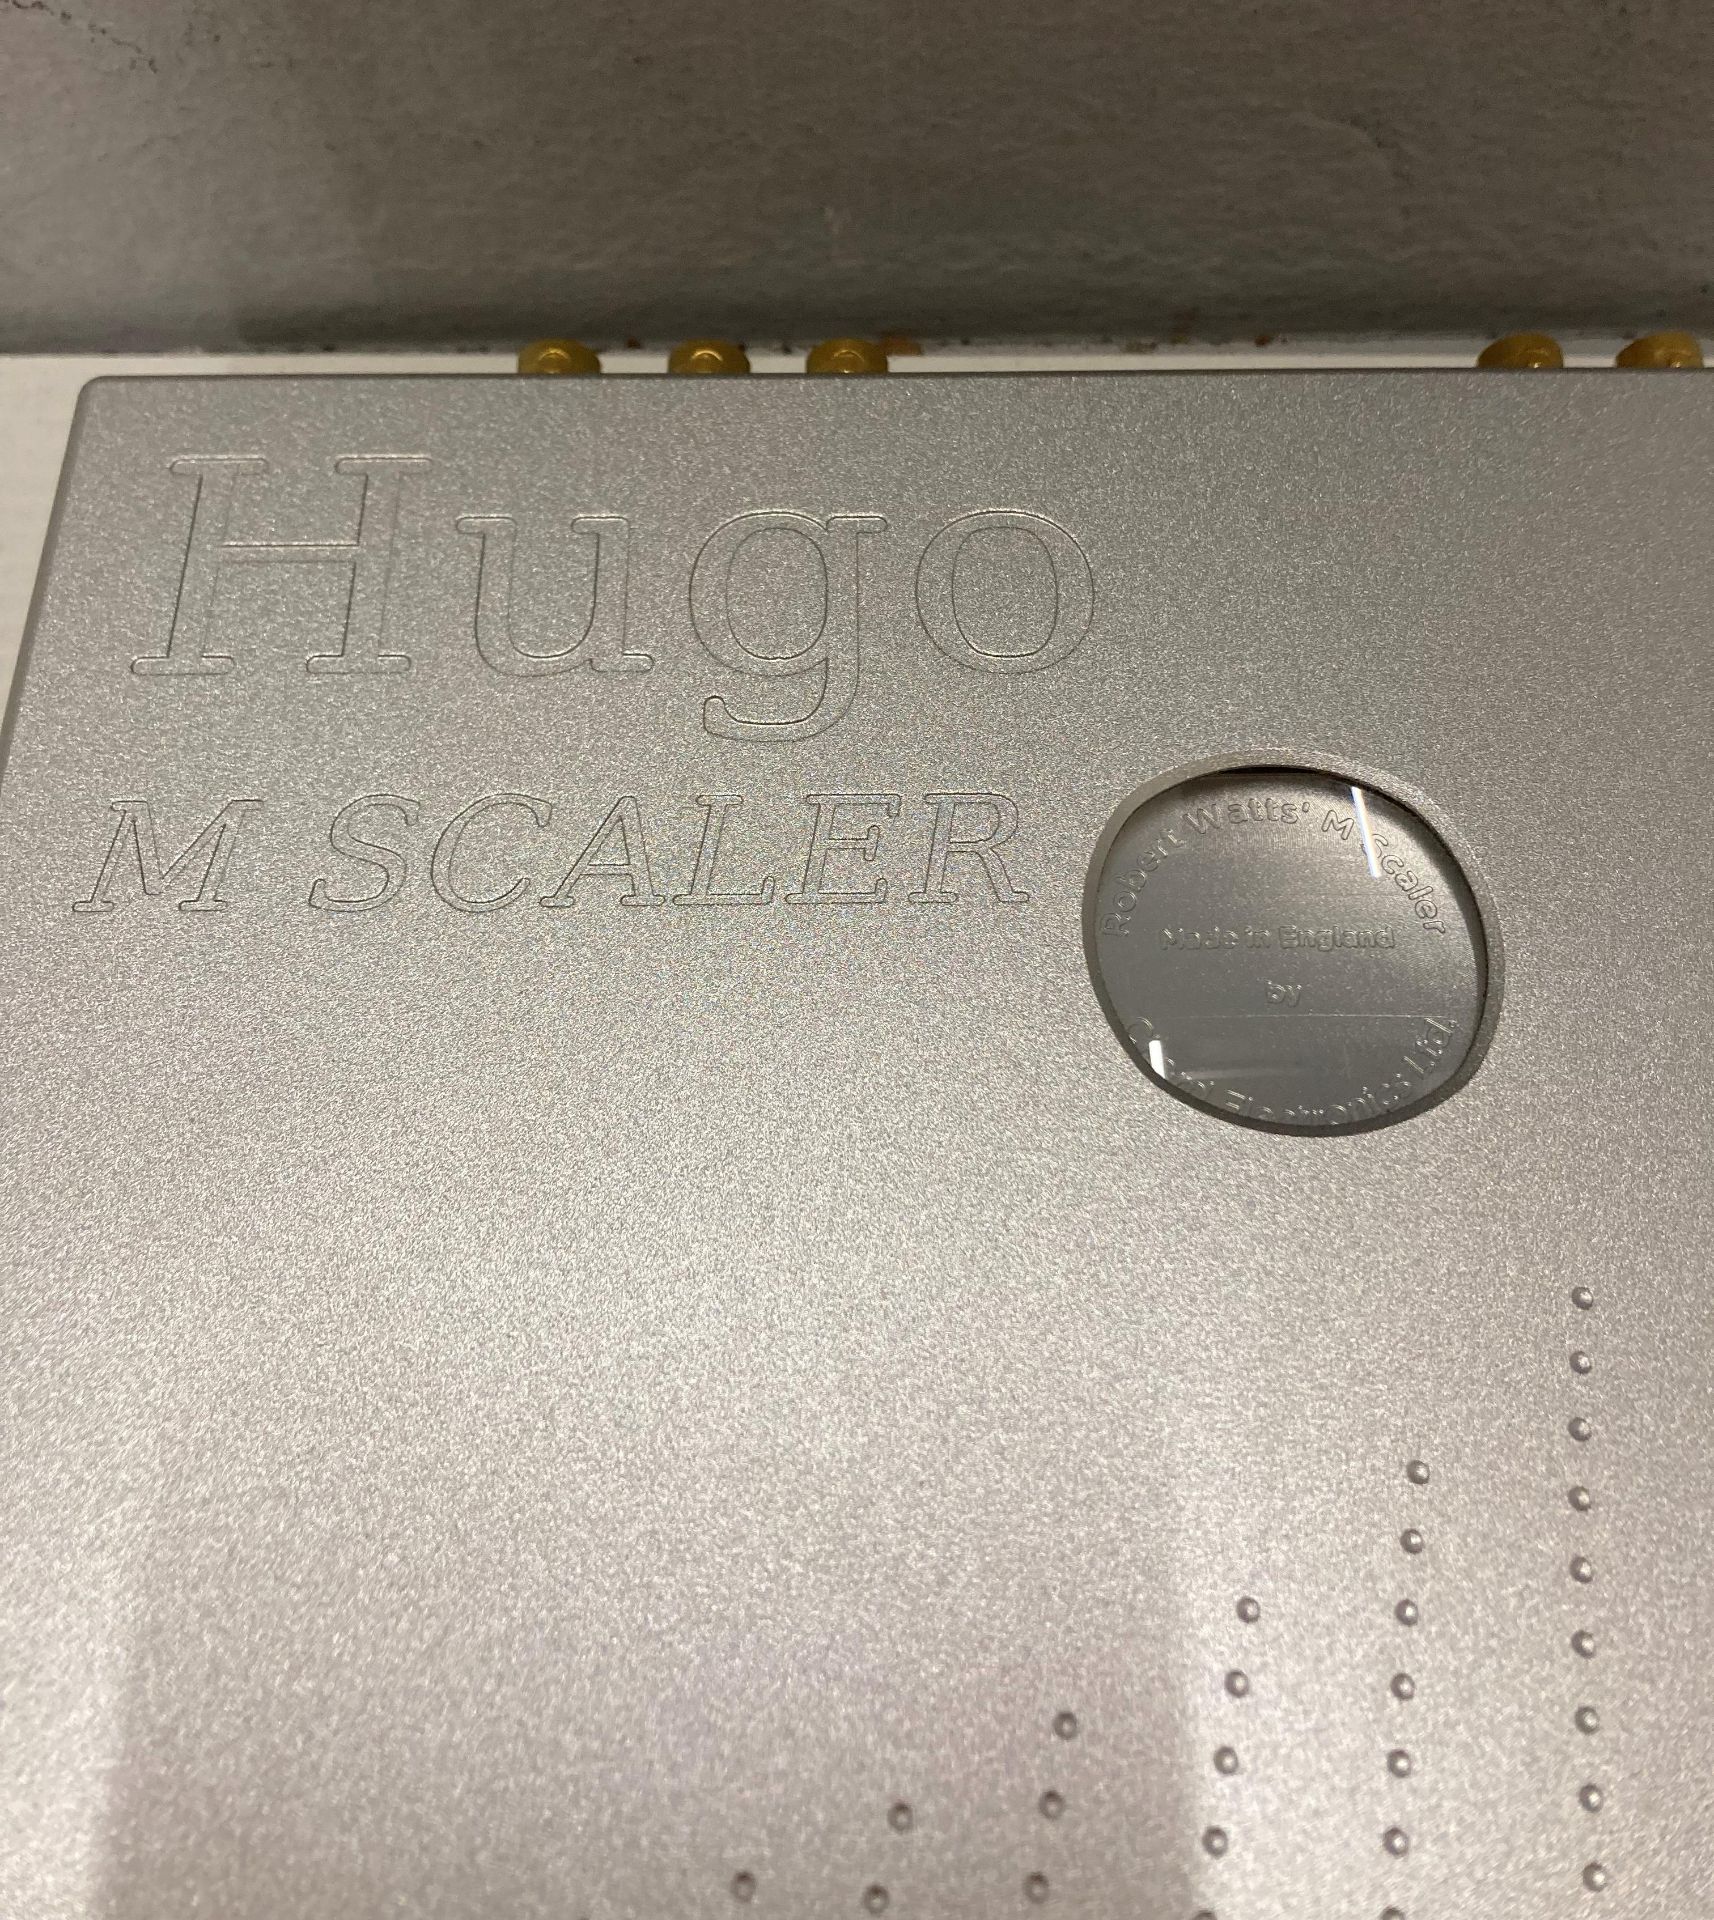 Chord Hugo M Scaler standalone 1M-Tap upscaling device (no power supply) (saleroom location: U13) - Image 3 of 4